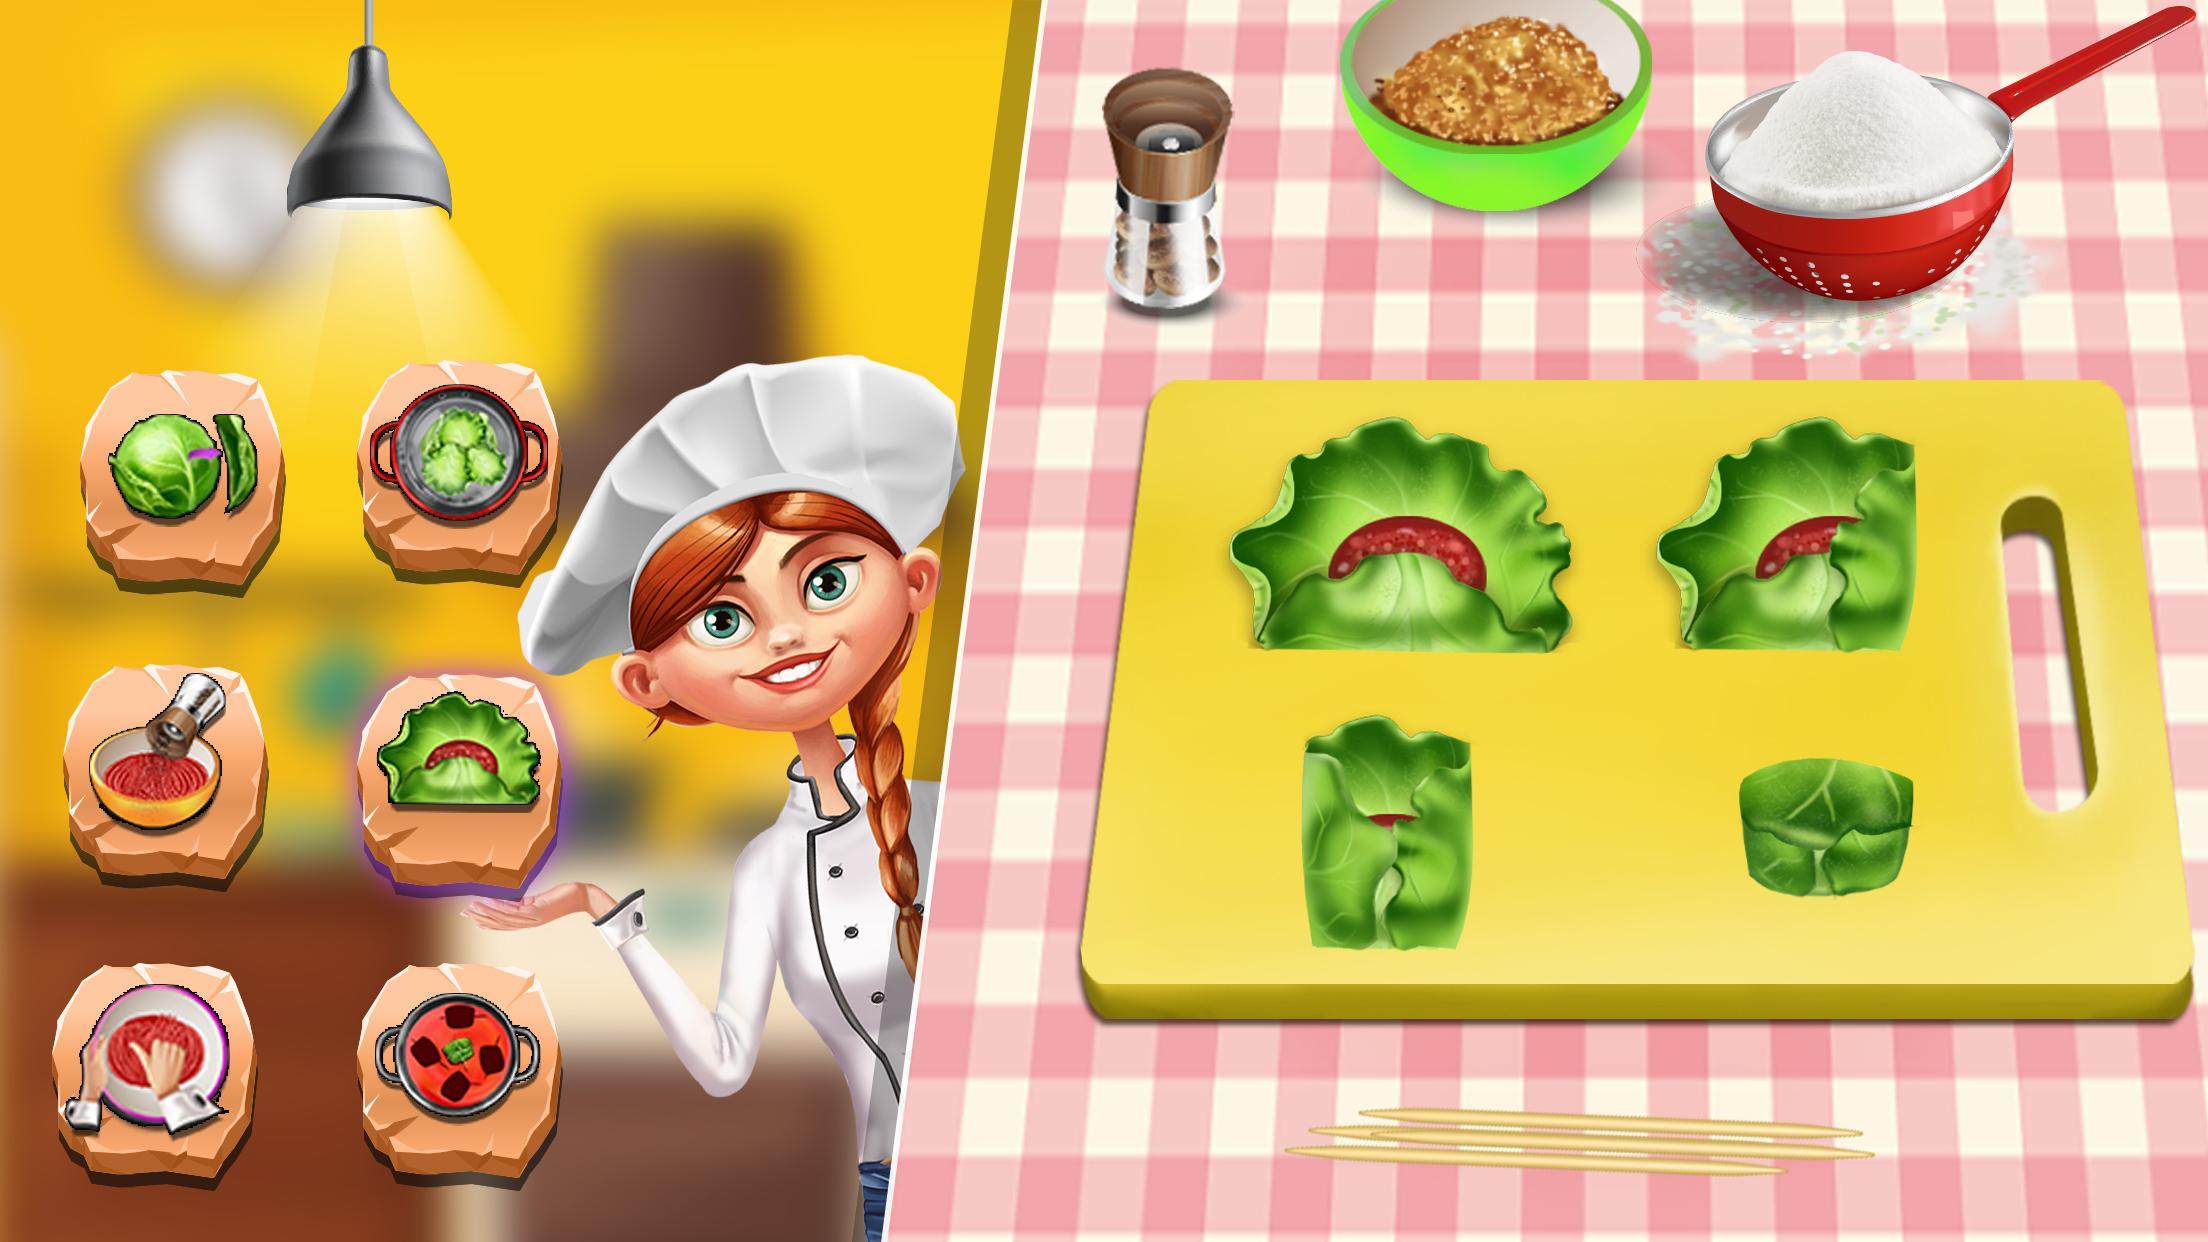 Игра Cooking Frenzy. Готовка с мамой игра. Кулинарное безумие -игра повар. Кулинарное безумие IOS.